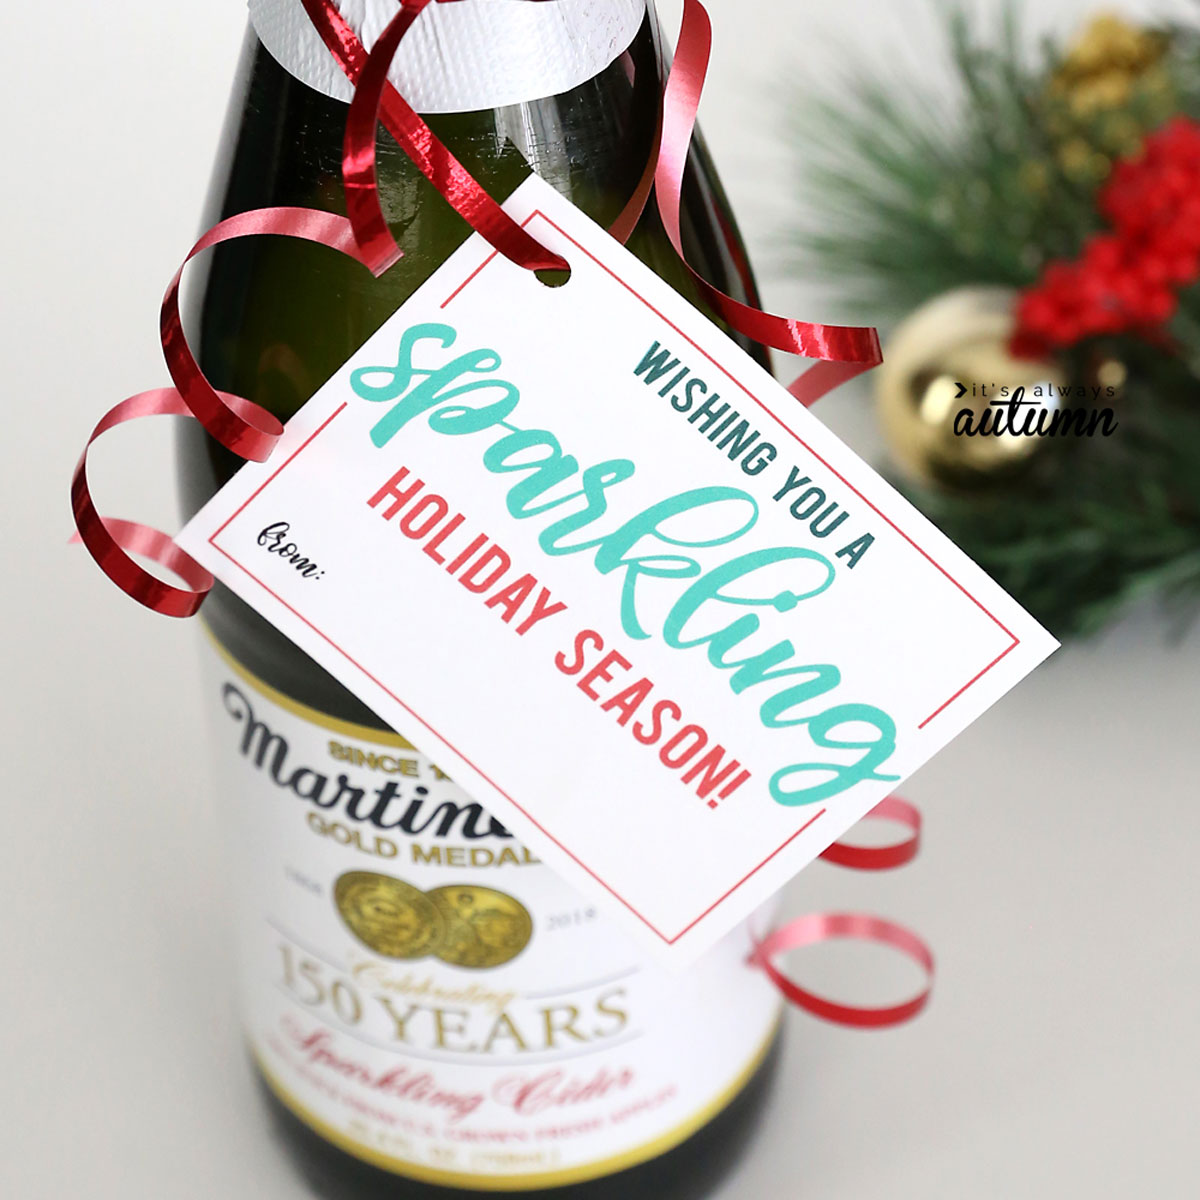 Printable Gift Tag Idea (Perfect for Christmas and Holidays!) - A